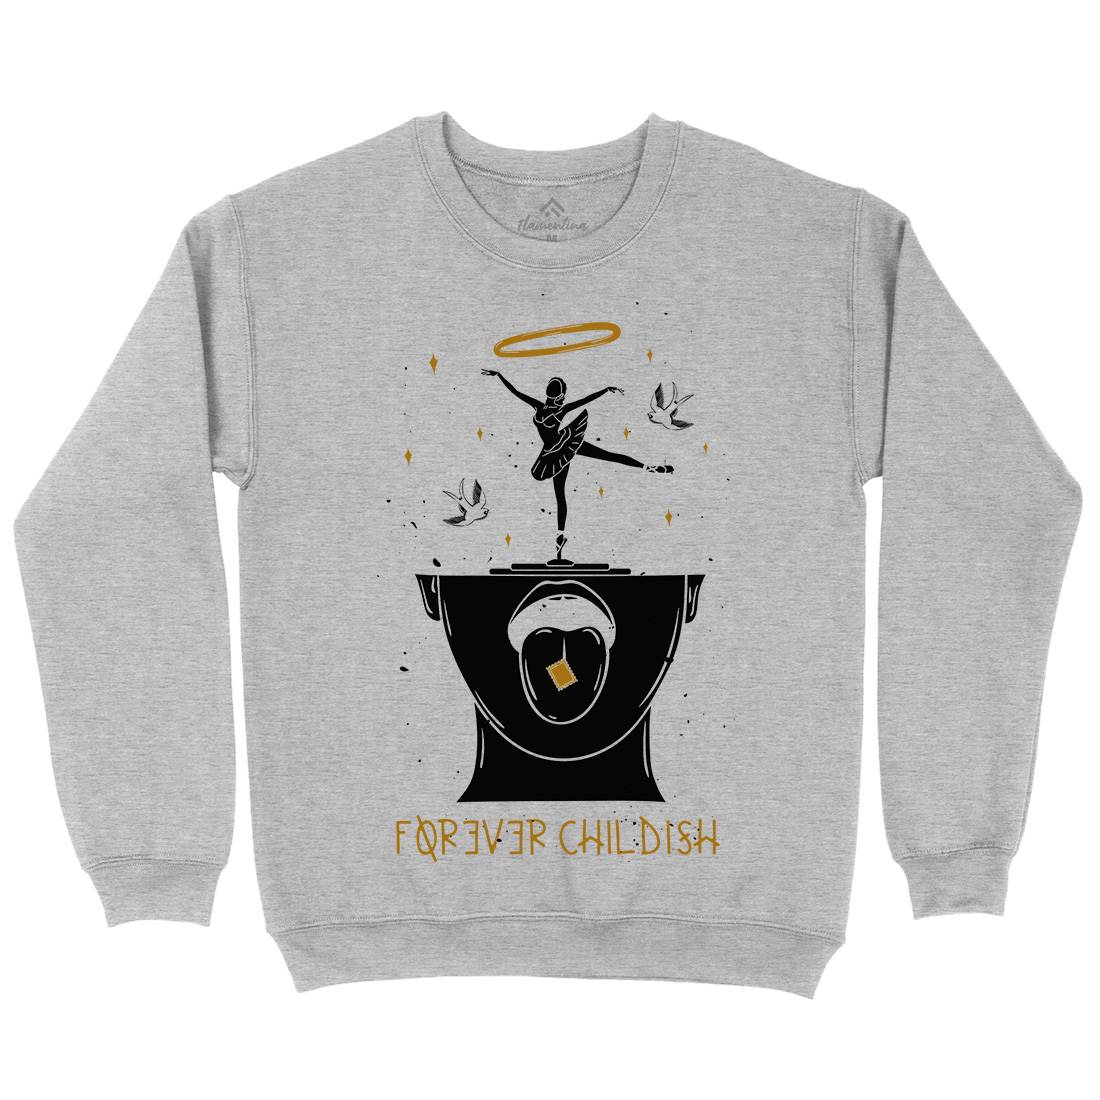 Forever Childish Kids Crew Neck Sweatshirt Quotes D457